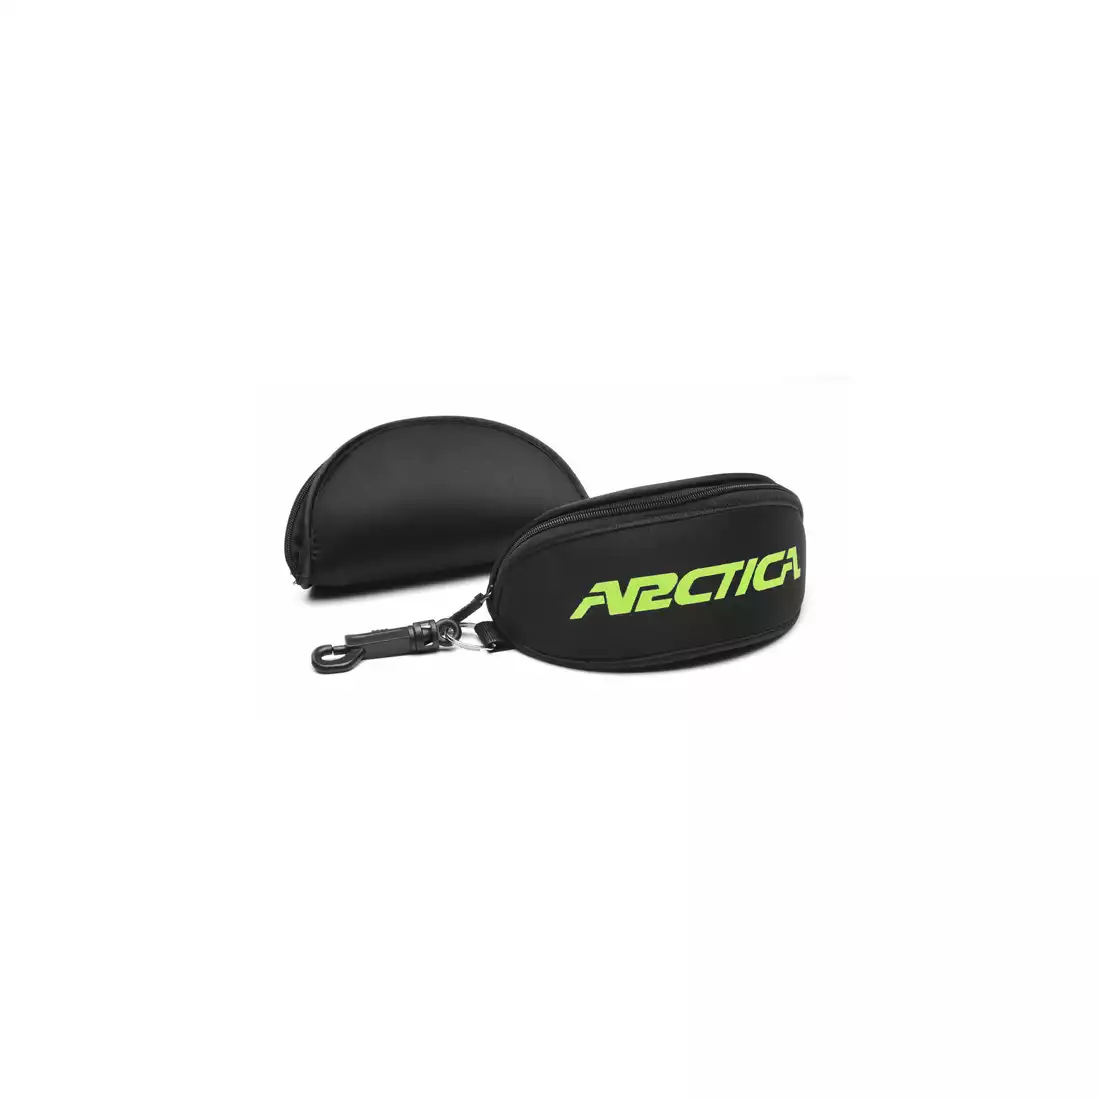 ARCTICA S-285 okulary rowerowe / sportowe